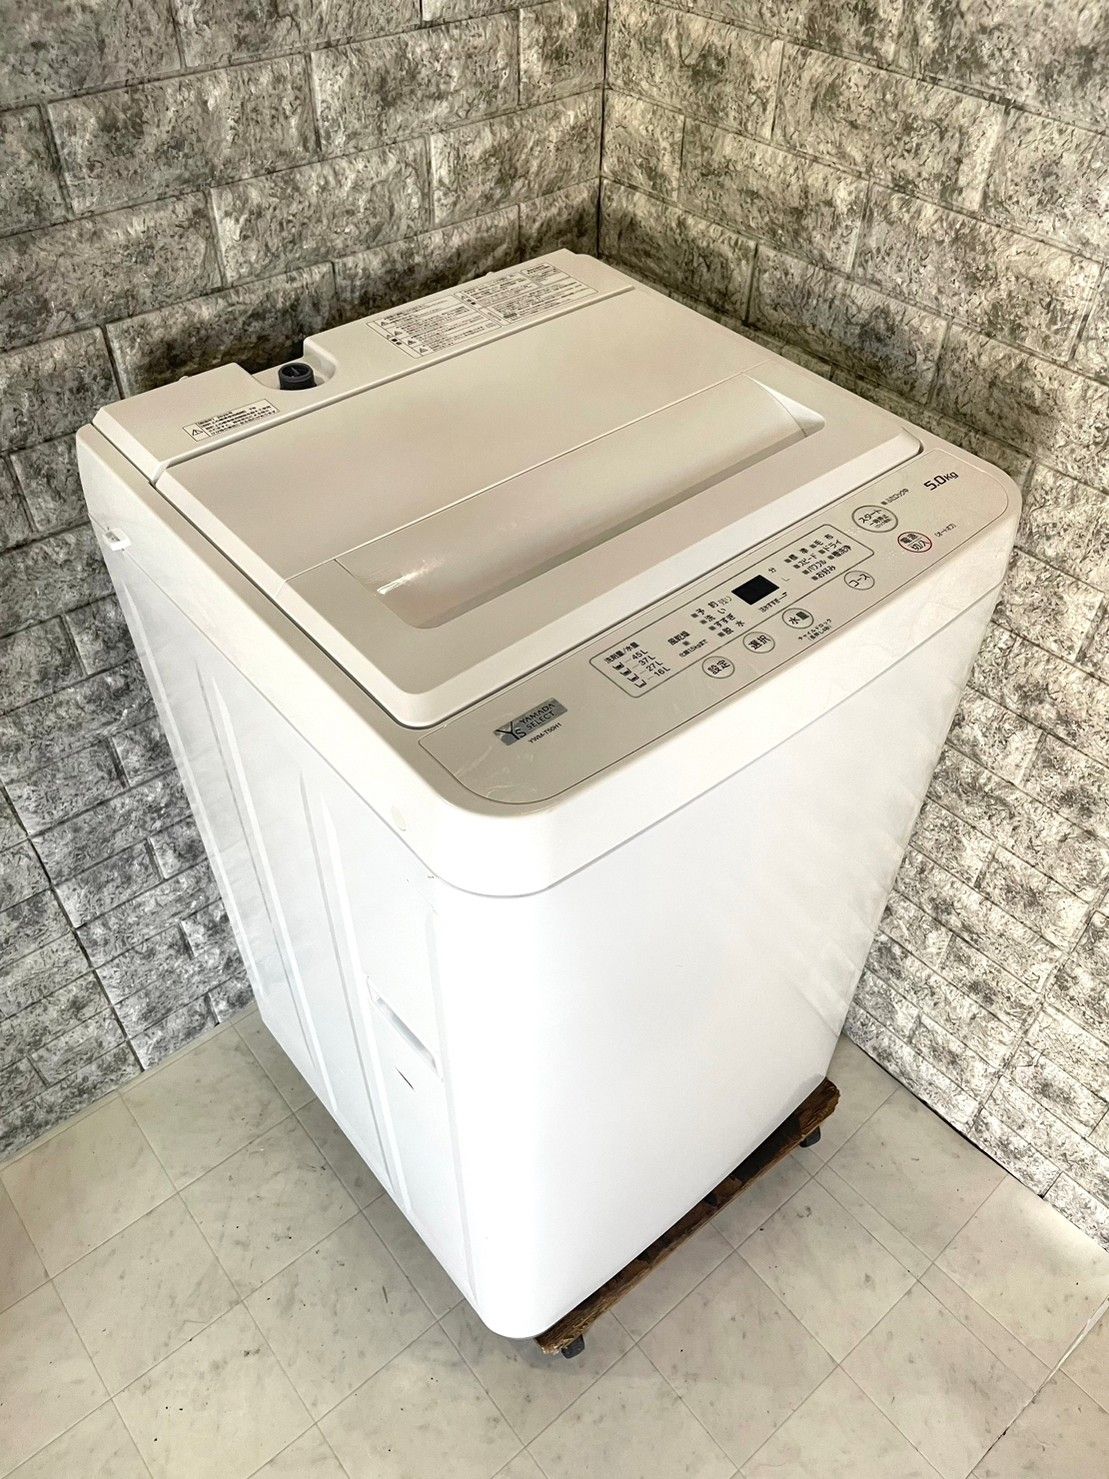 国産正規品【高年式】2021年式 5kg YAMADA ヤマダ 洗濯機 YWM-T50H1 洗濯機